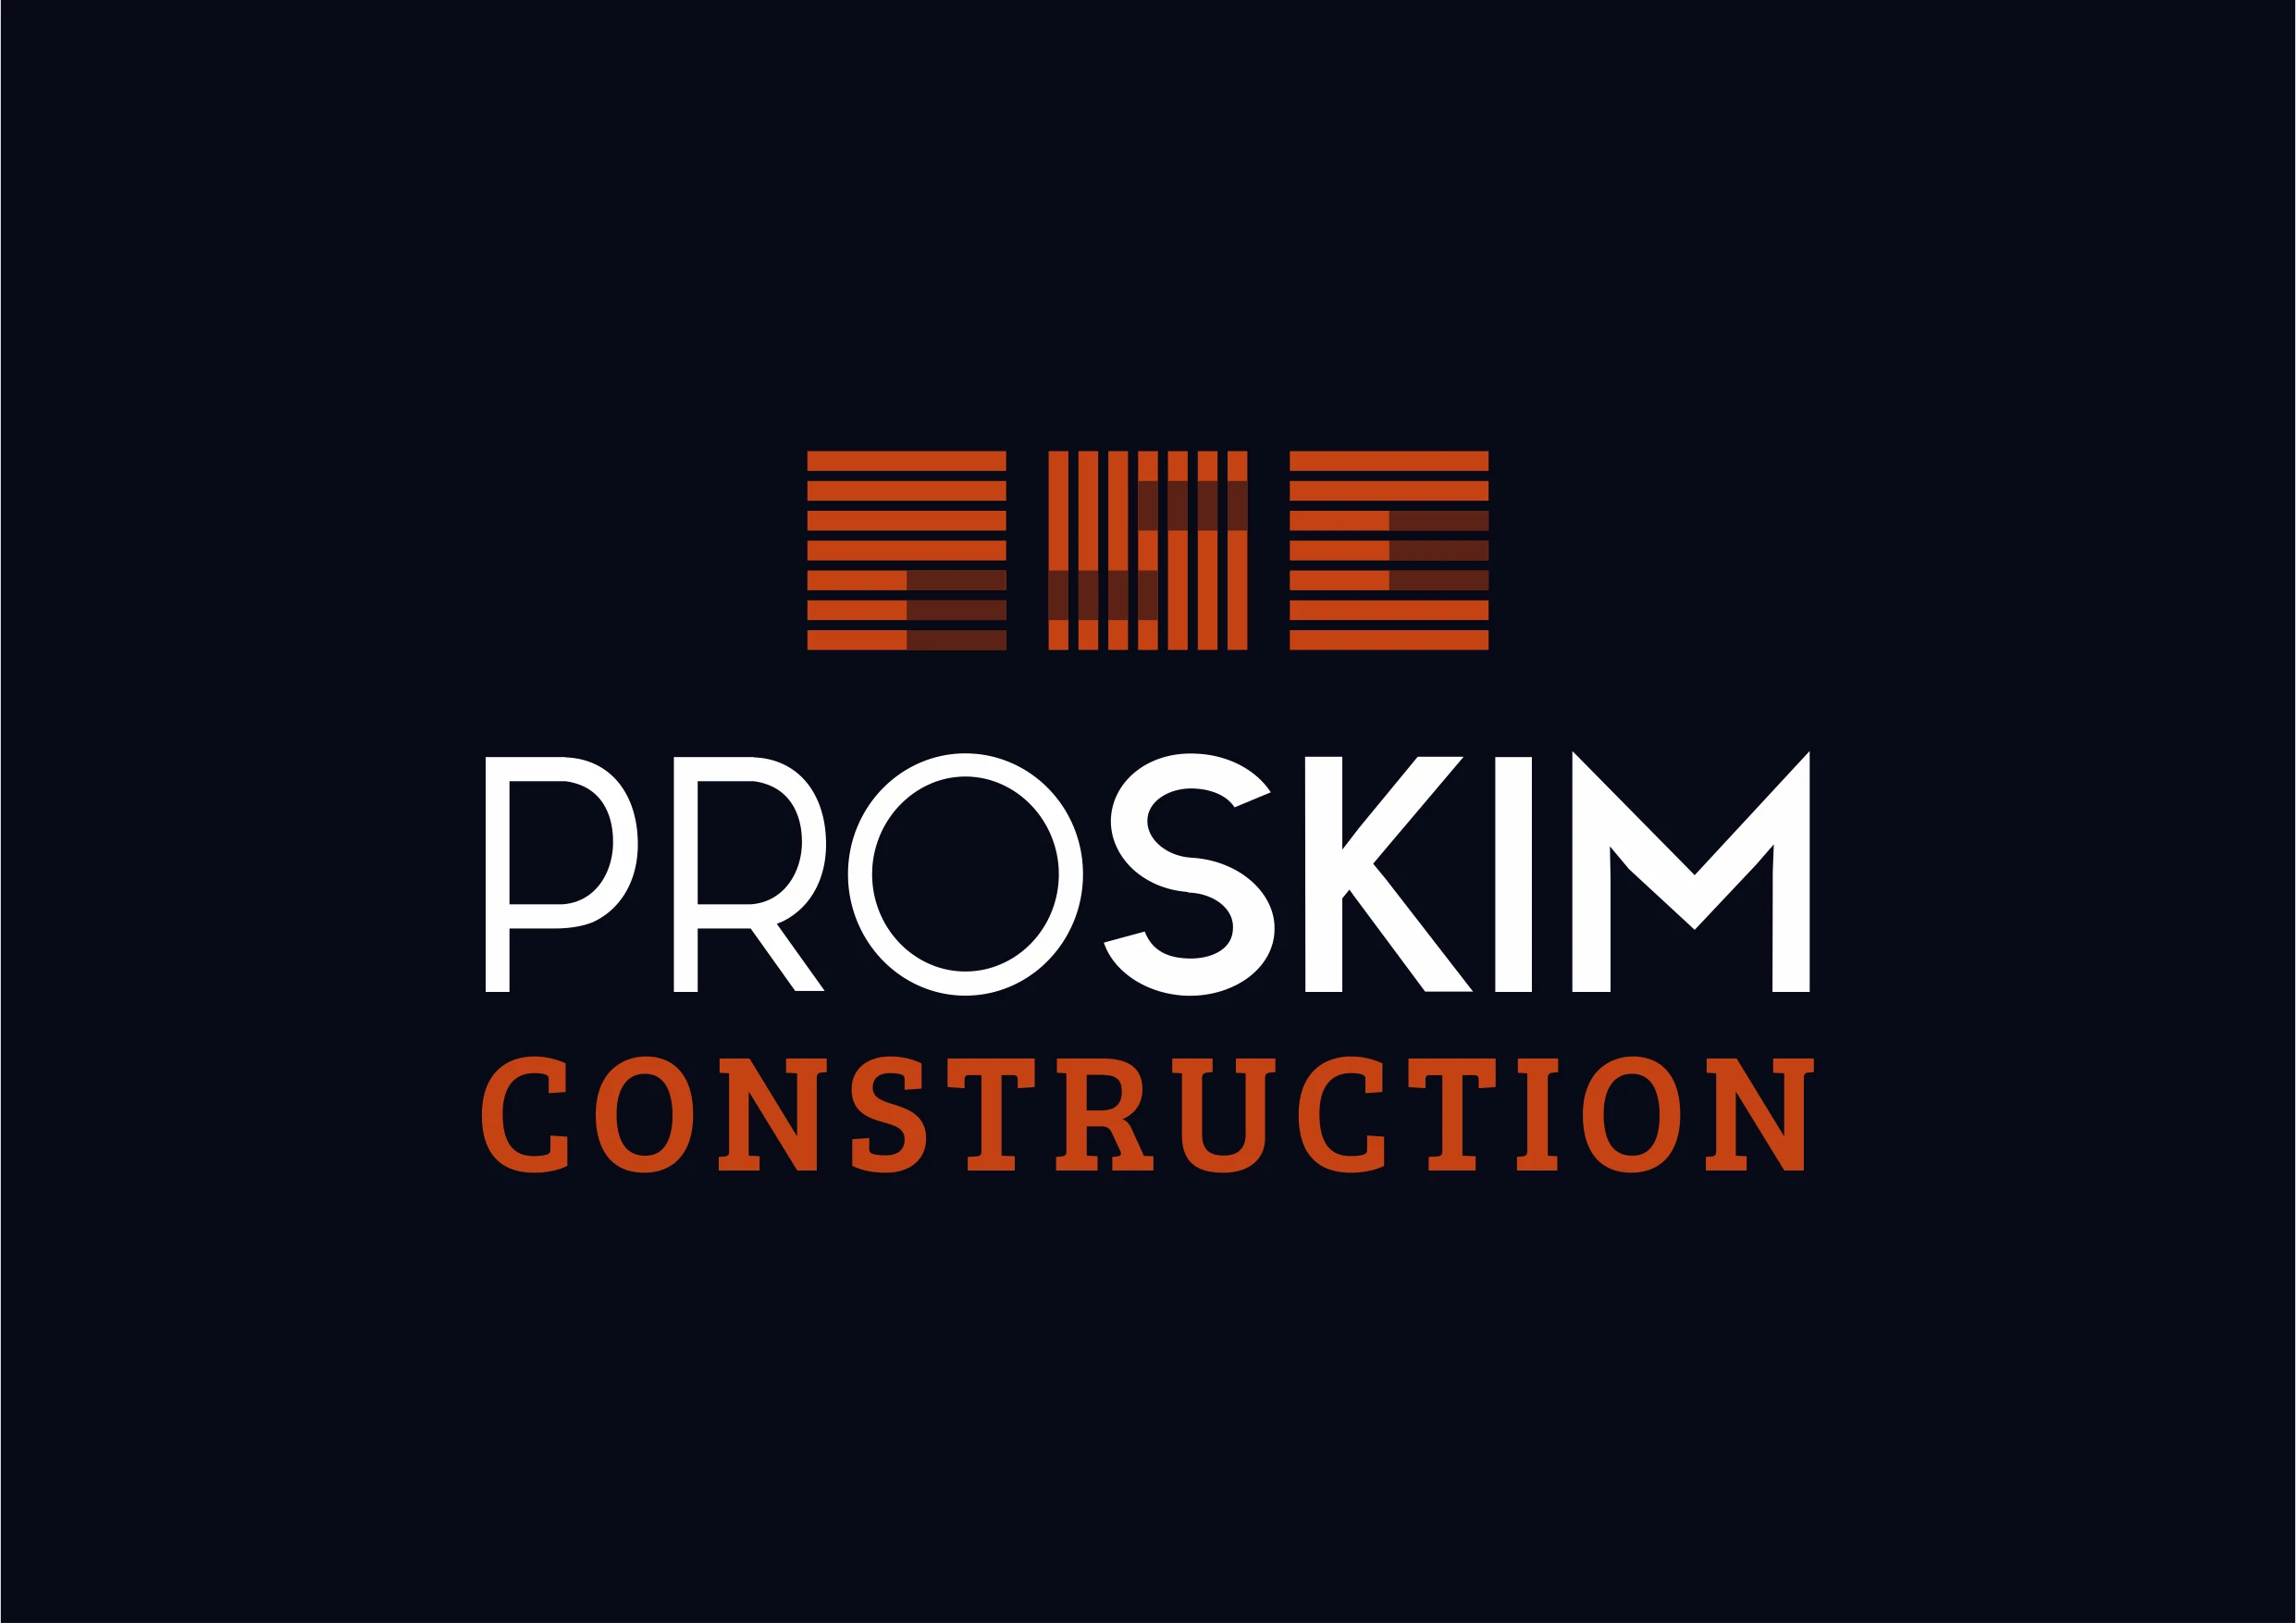 Testimonial from George Proskim construction Proskim Construction GPC